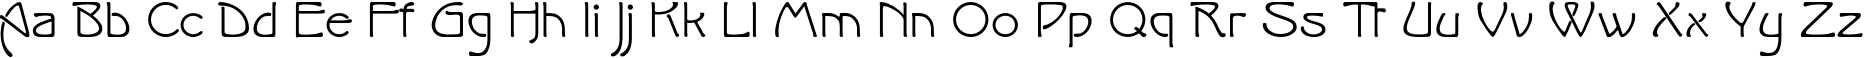 Пример написания английского алфавита шрифтом IsadoraSV TYGRA